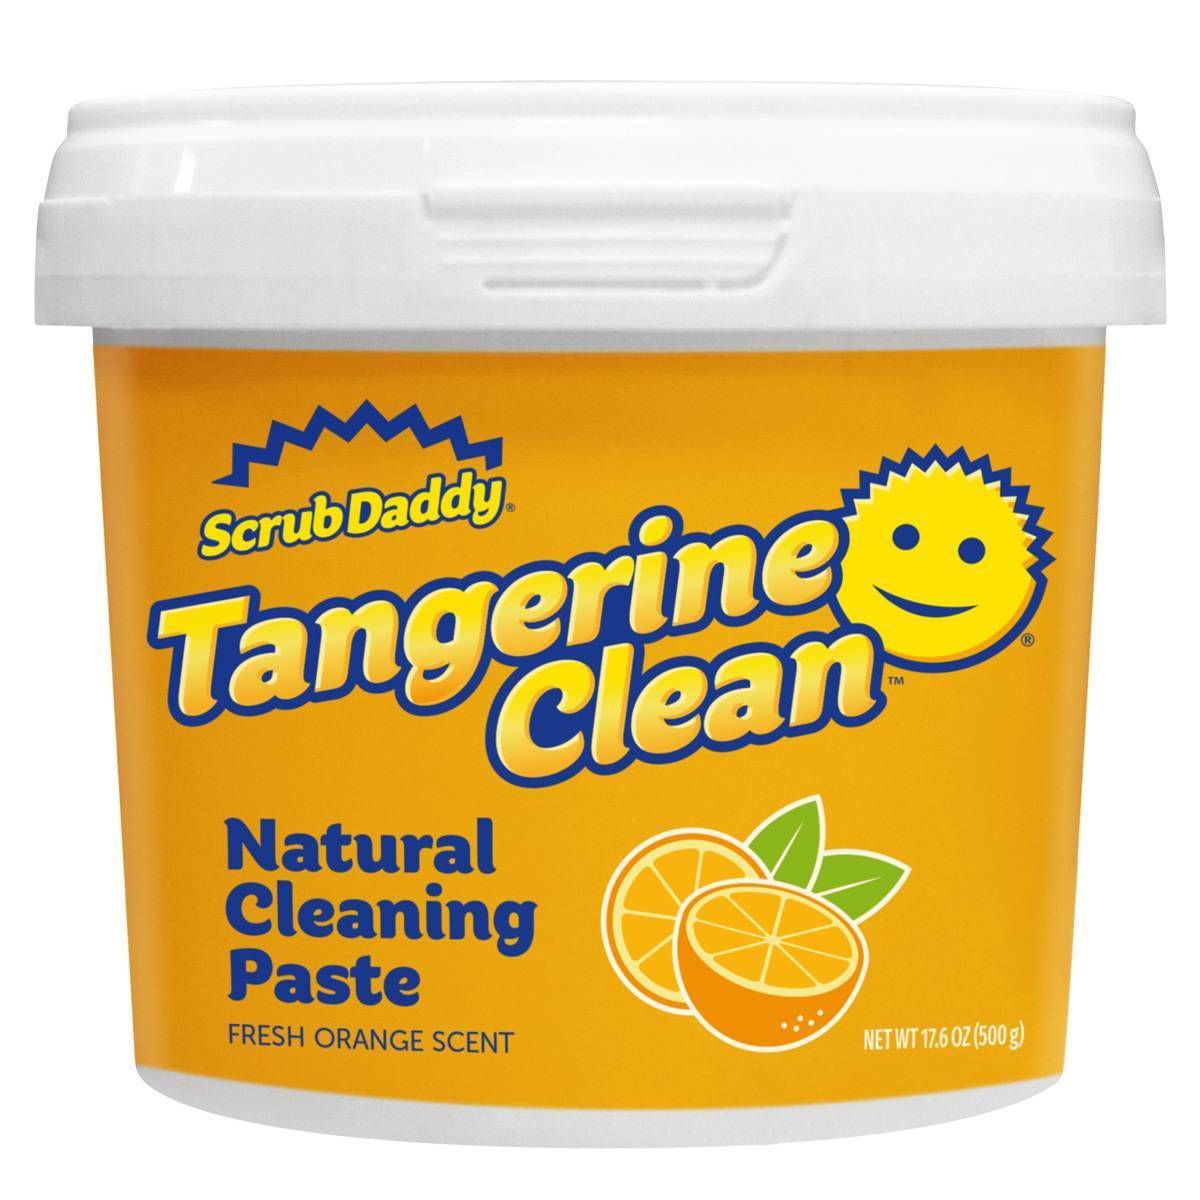 Scrub Daddy Tangerine Clean Natural Cleaning Paste - Fresh Orange Scent | Target